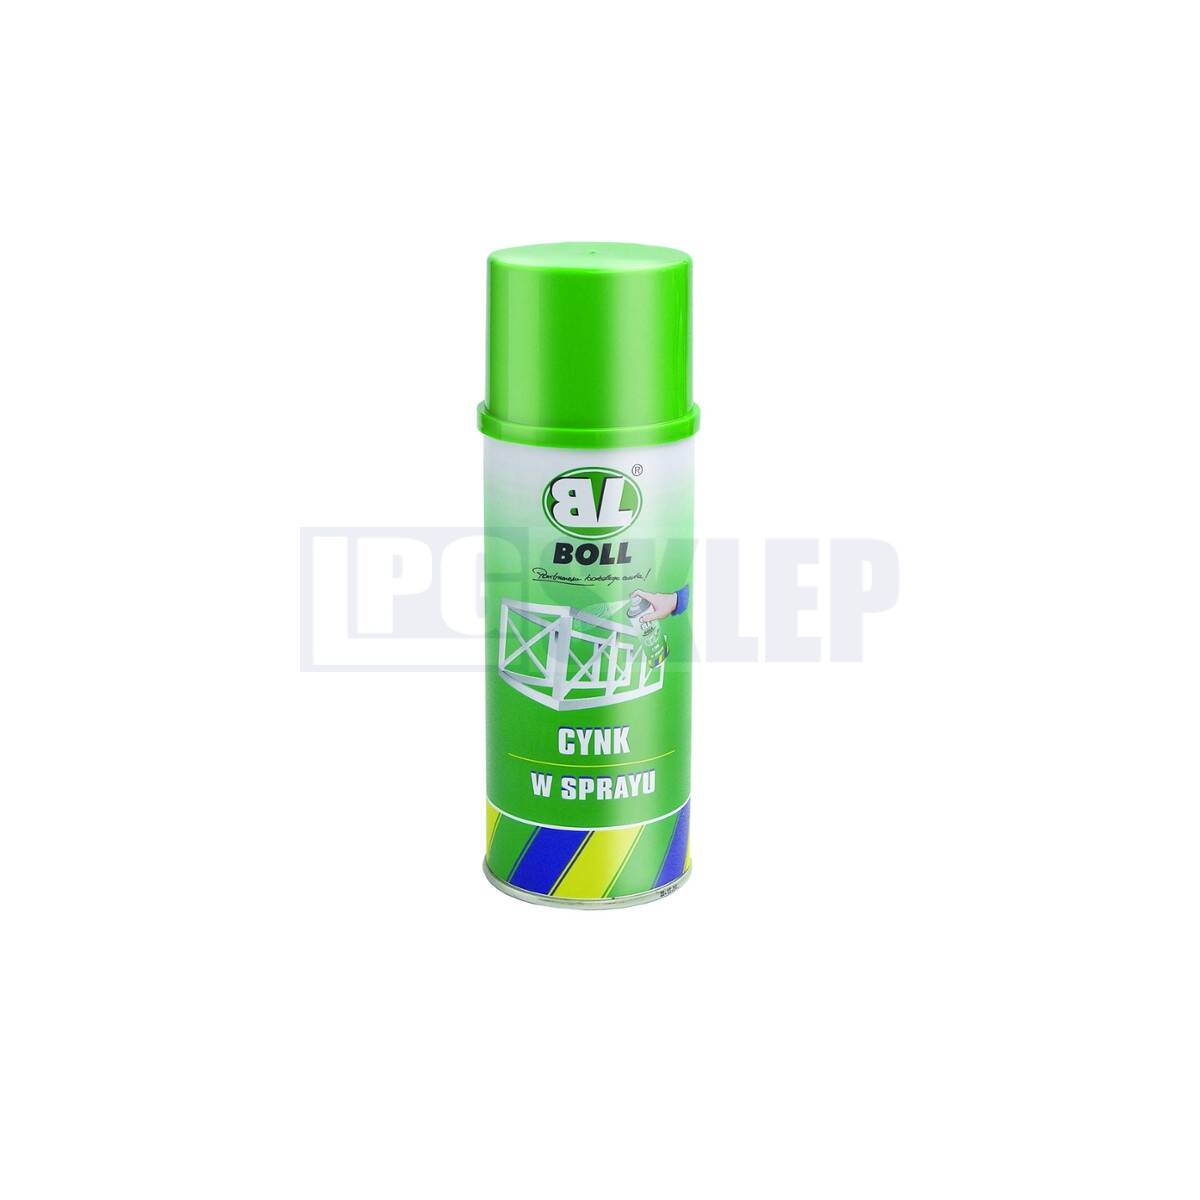 BOLL Cynk - spray 400 ml (Zdjęcie 1)